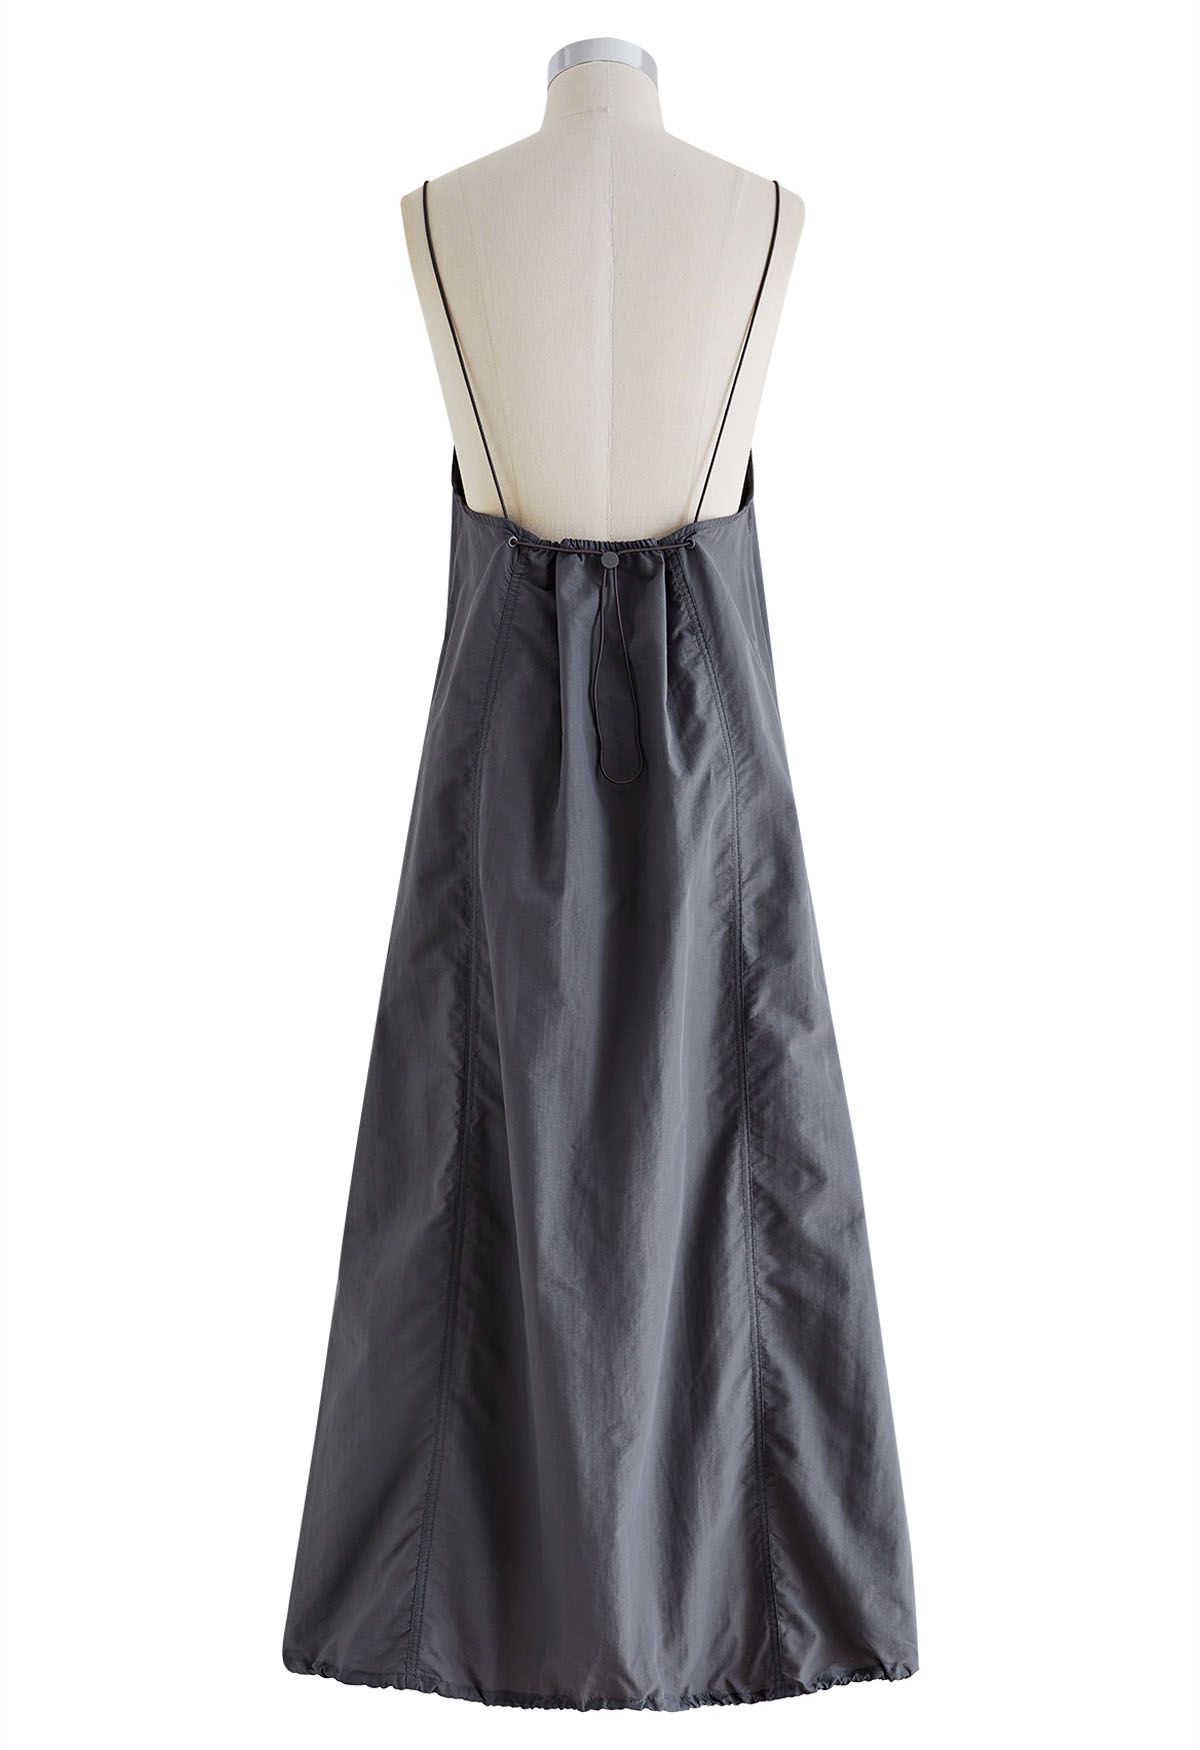 Cargo Queen Khaki Mesh Ruched Detail Mini Dress - ShopperBoard